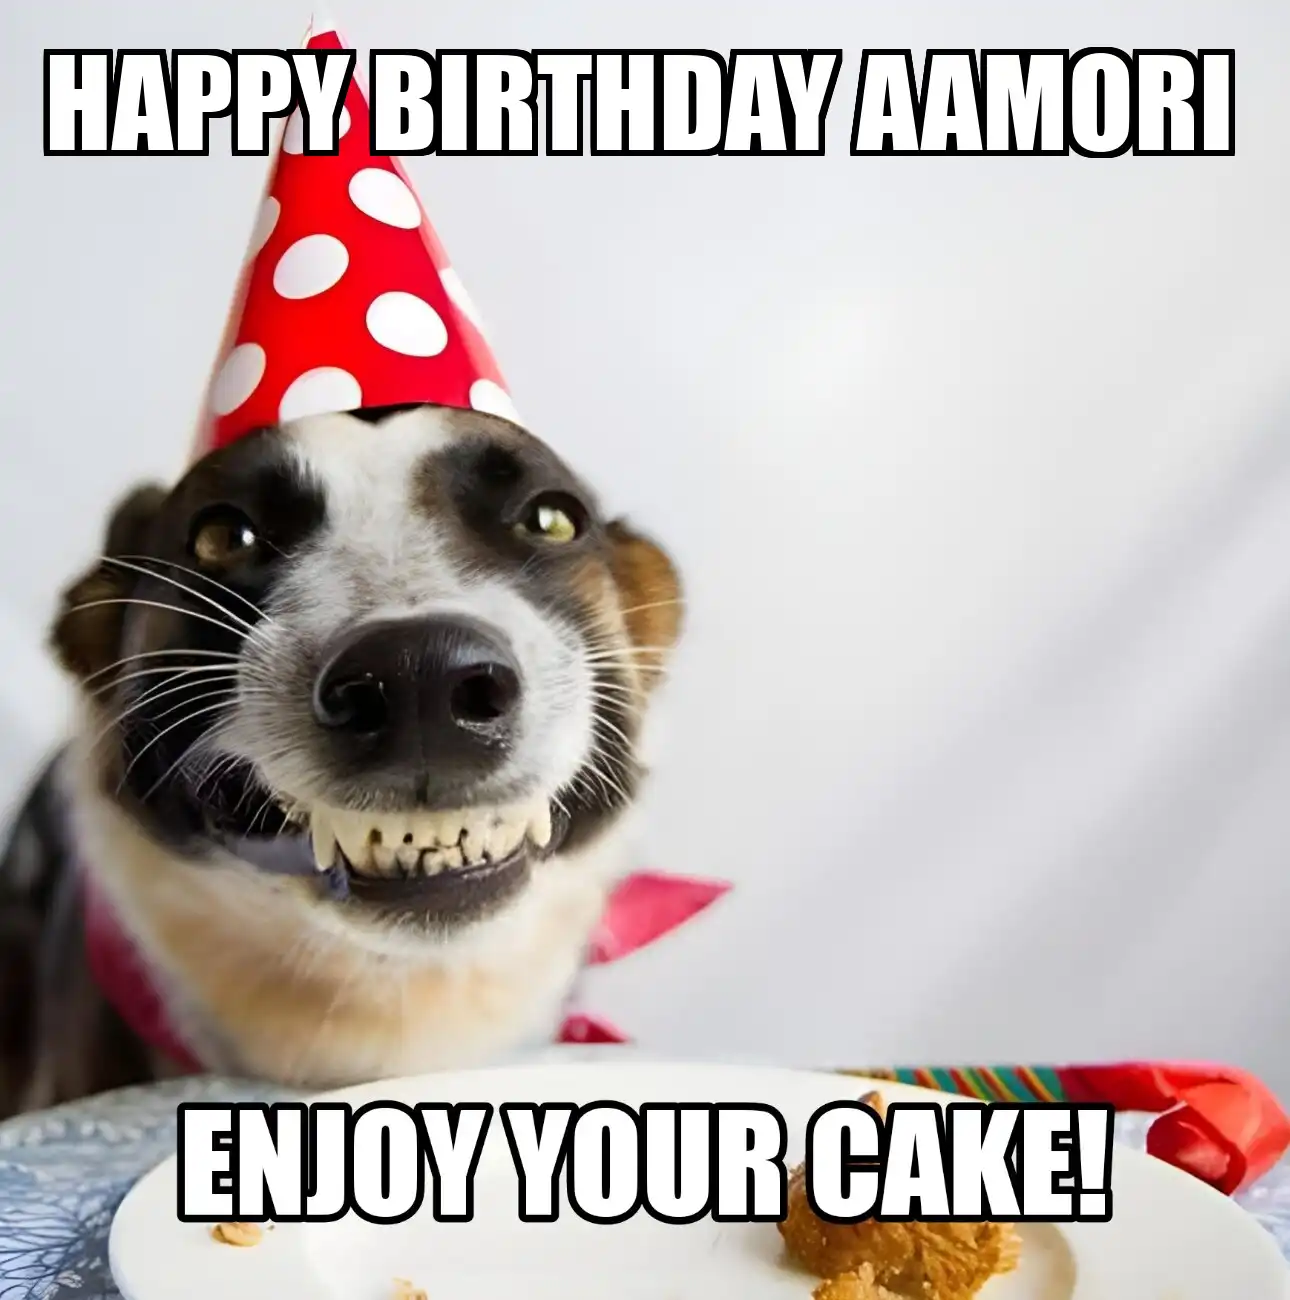 Happy Birthday Aamori Enjoy Your Cake Dog Meme